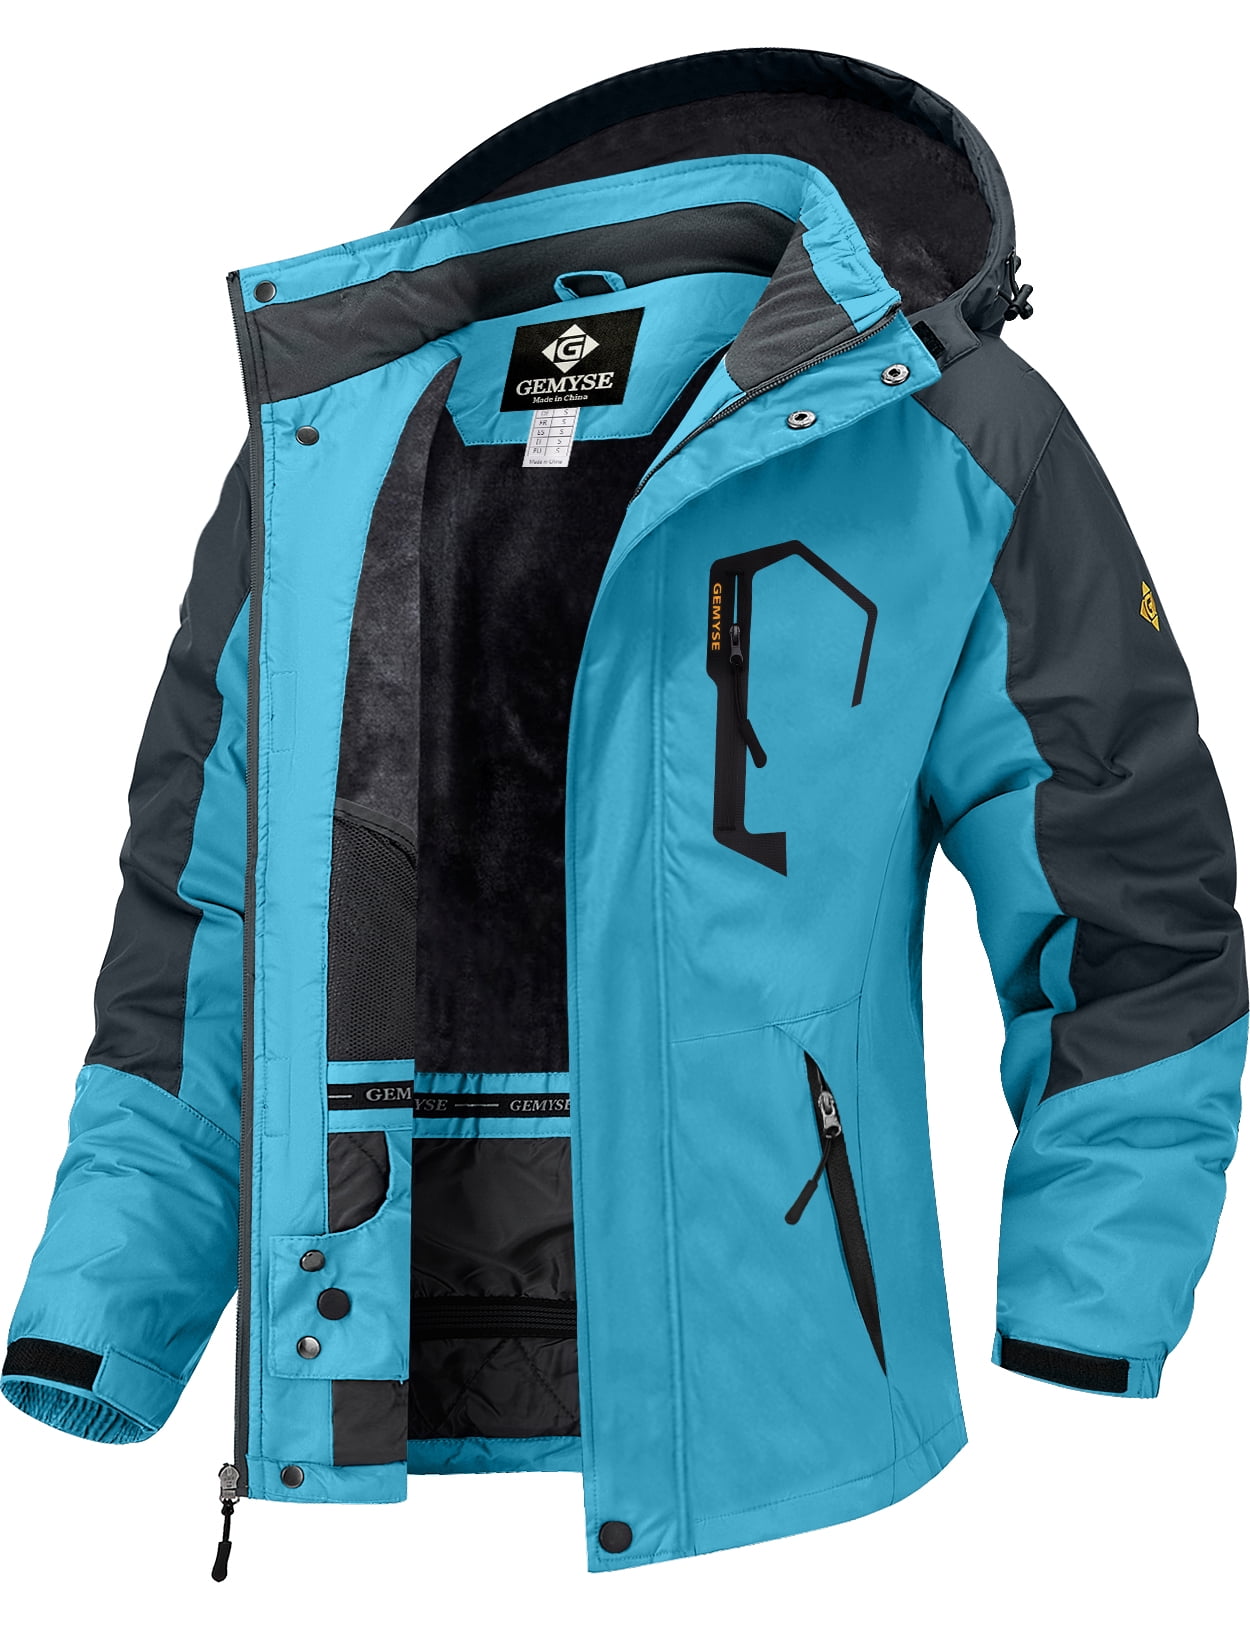 Skieer Women's Waterproof Ski Jacket Windproof Rain Jacket Winter